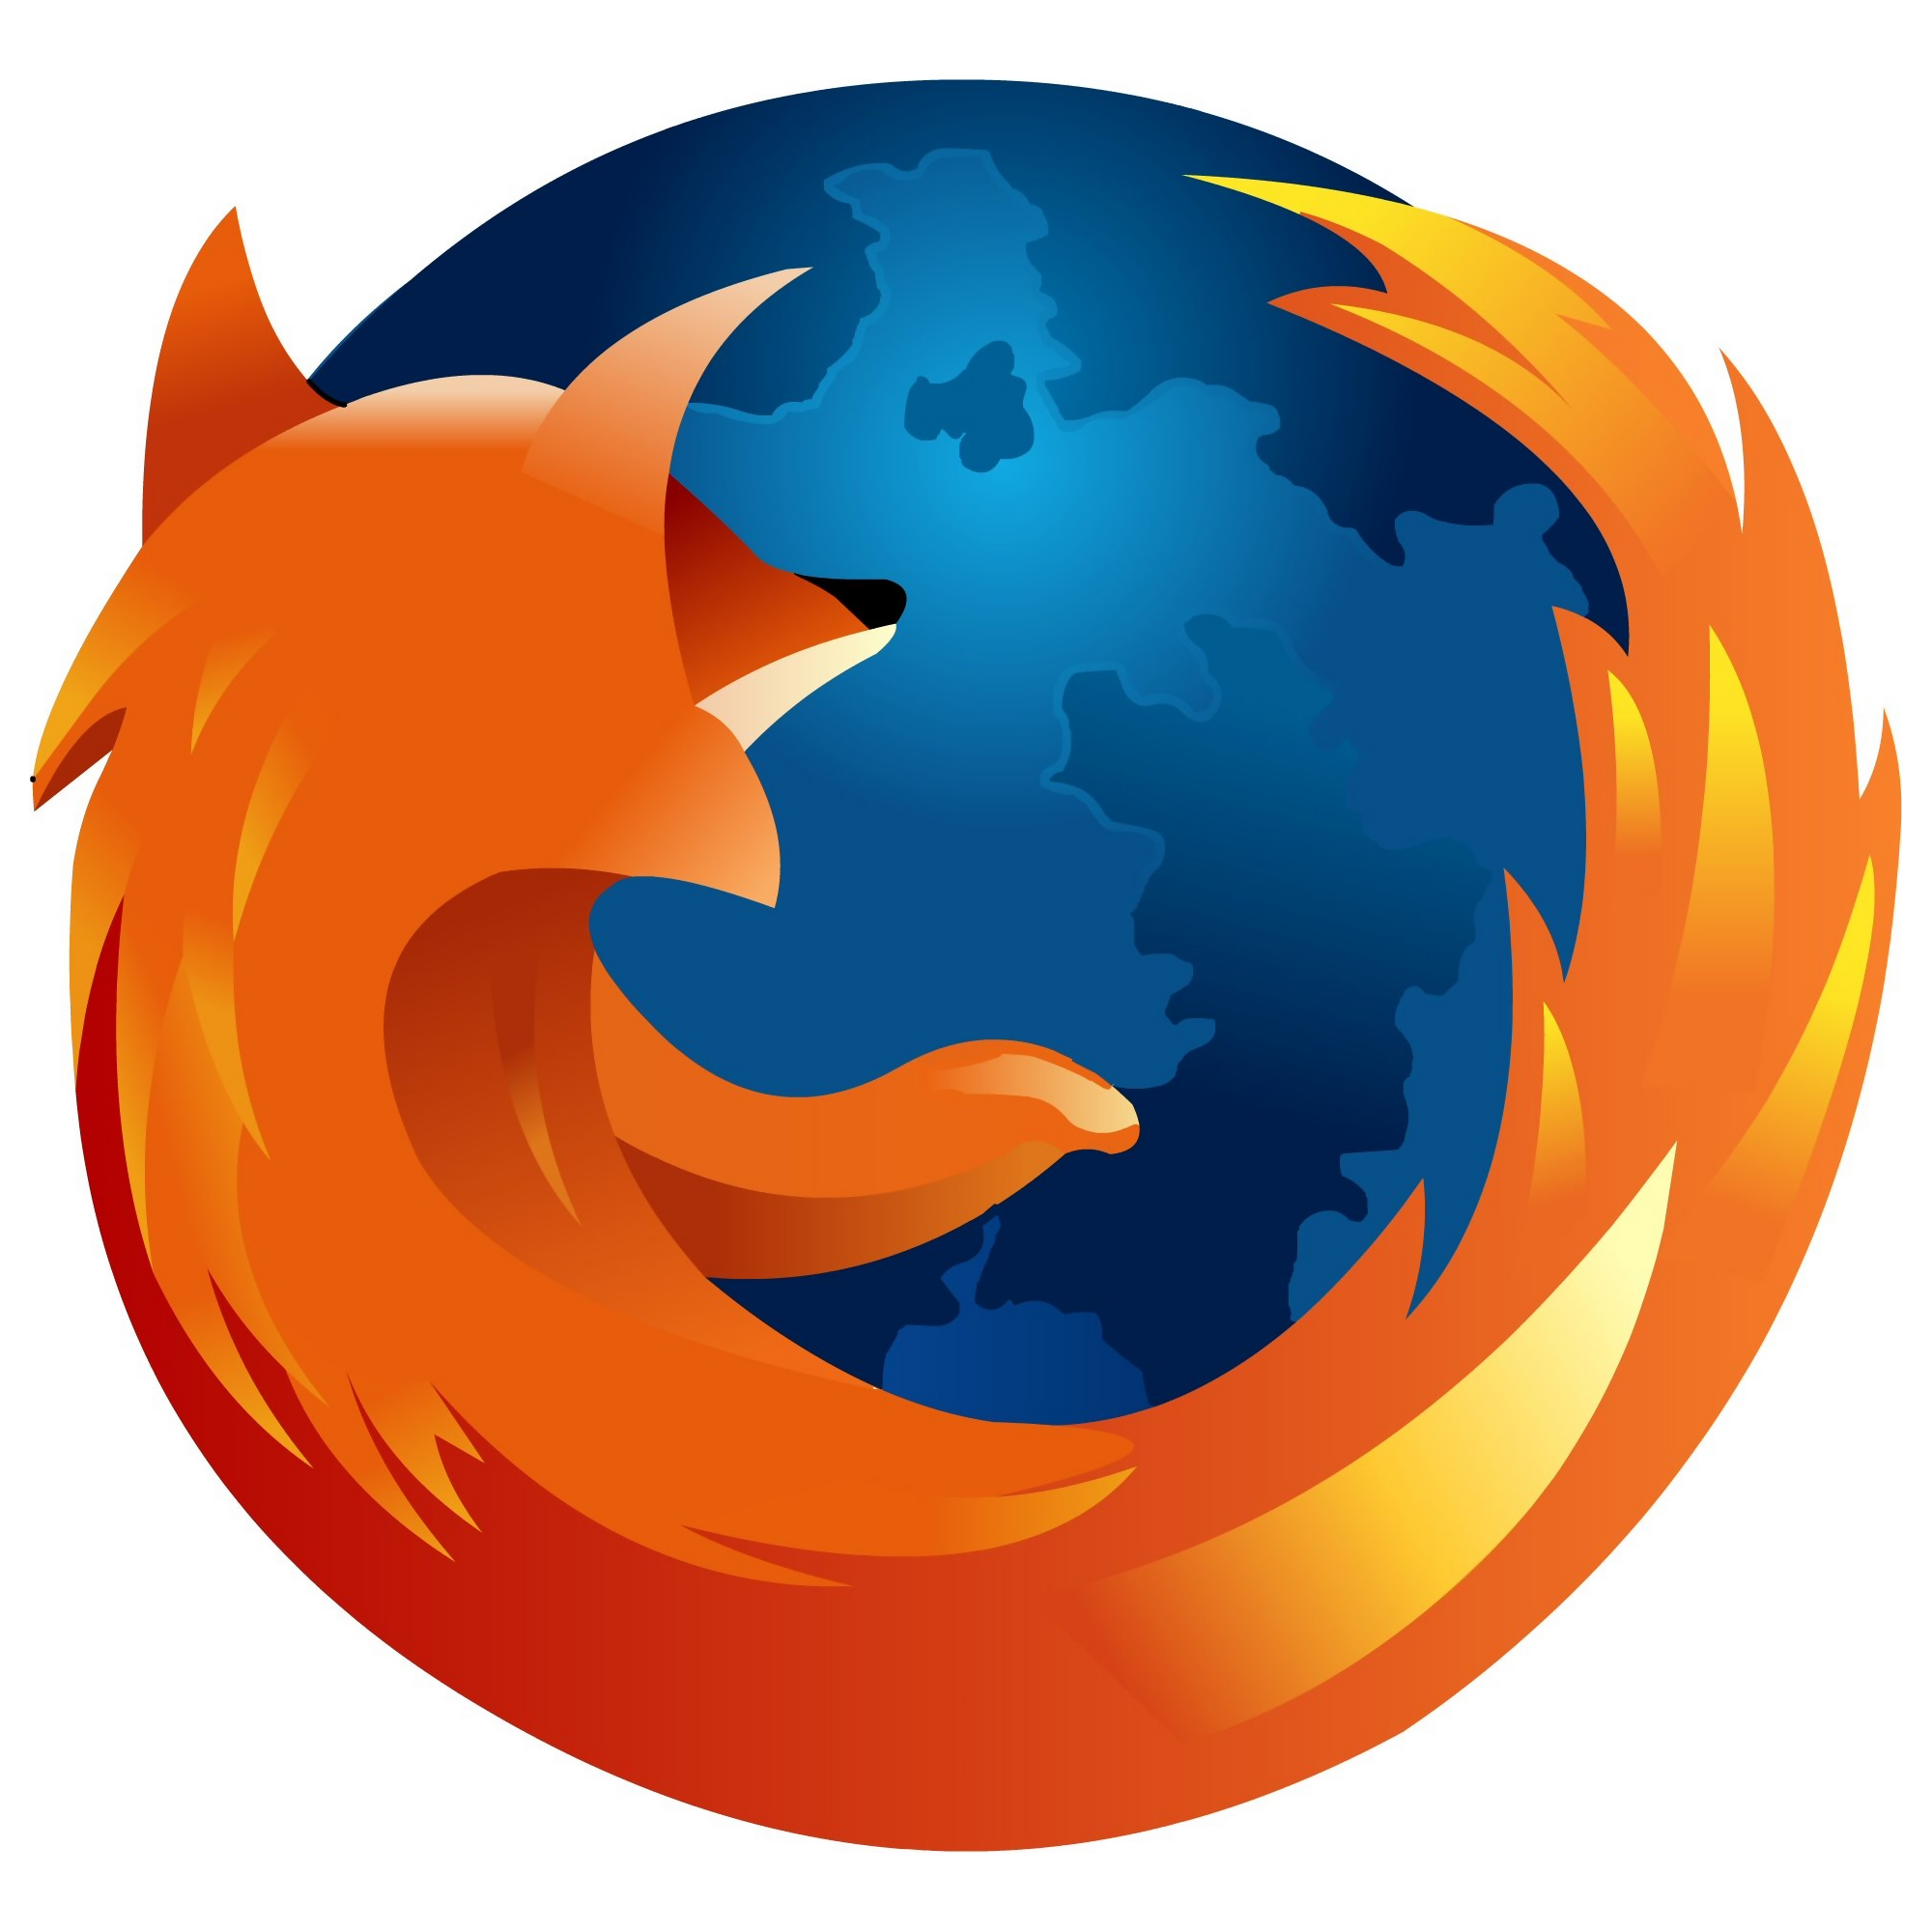 Mozilla VPN - Wikipedia